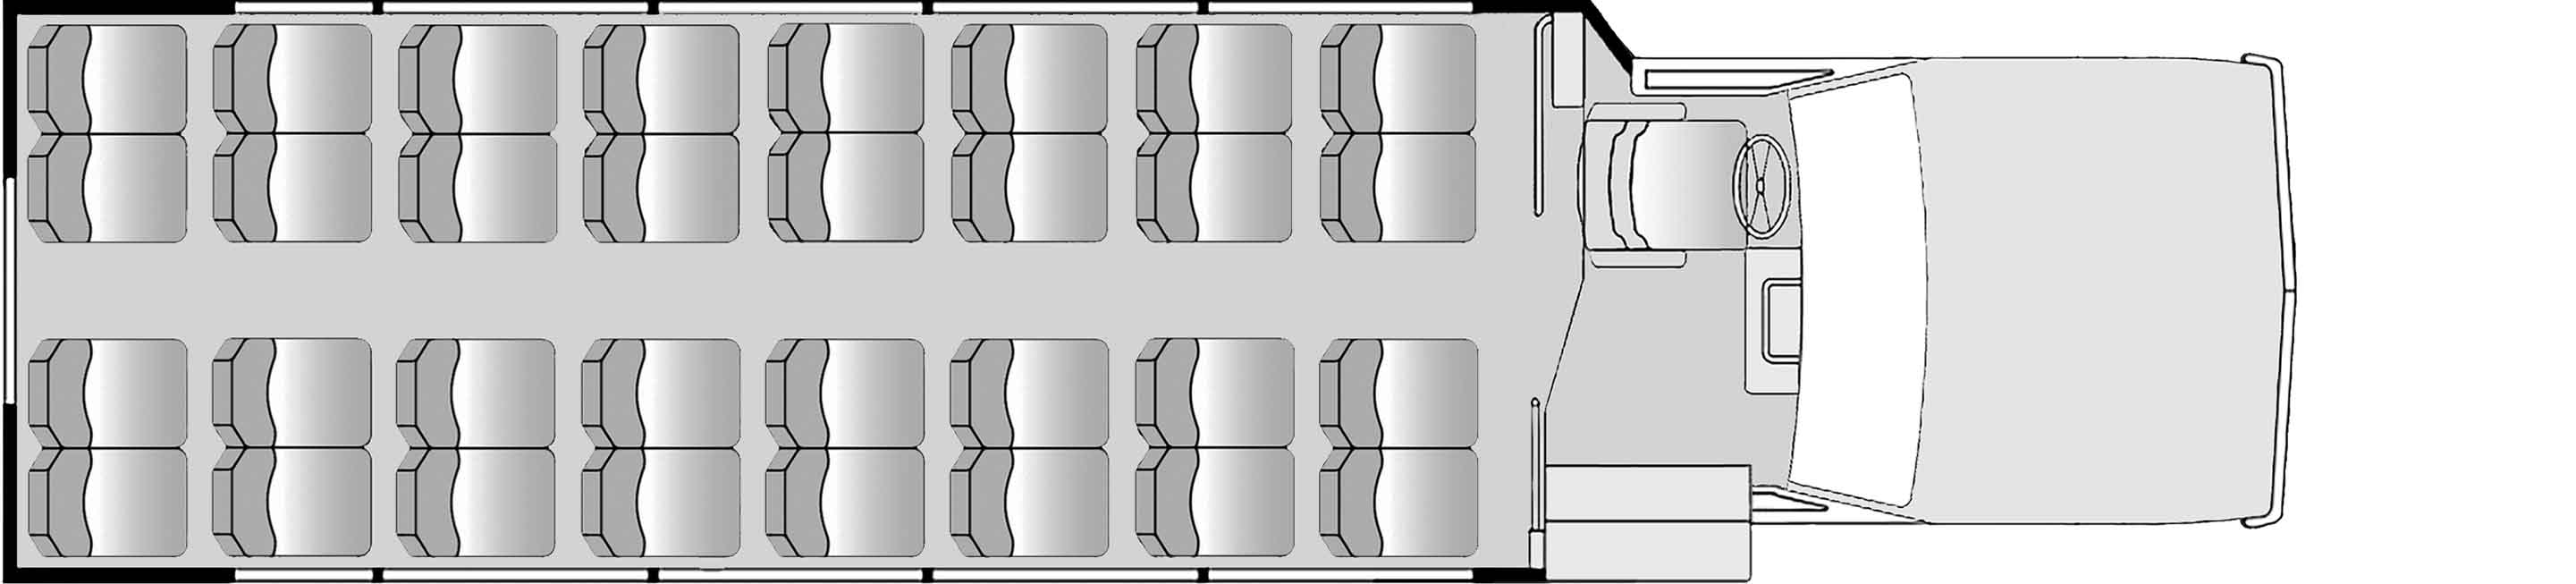 32 Passenger Plus Driver Floorplan Image